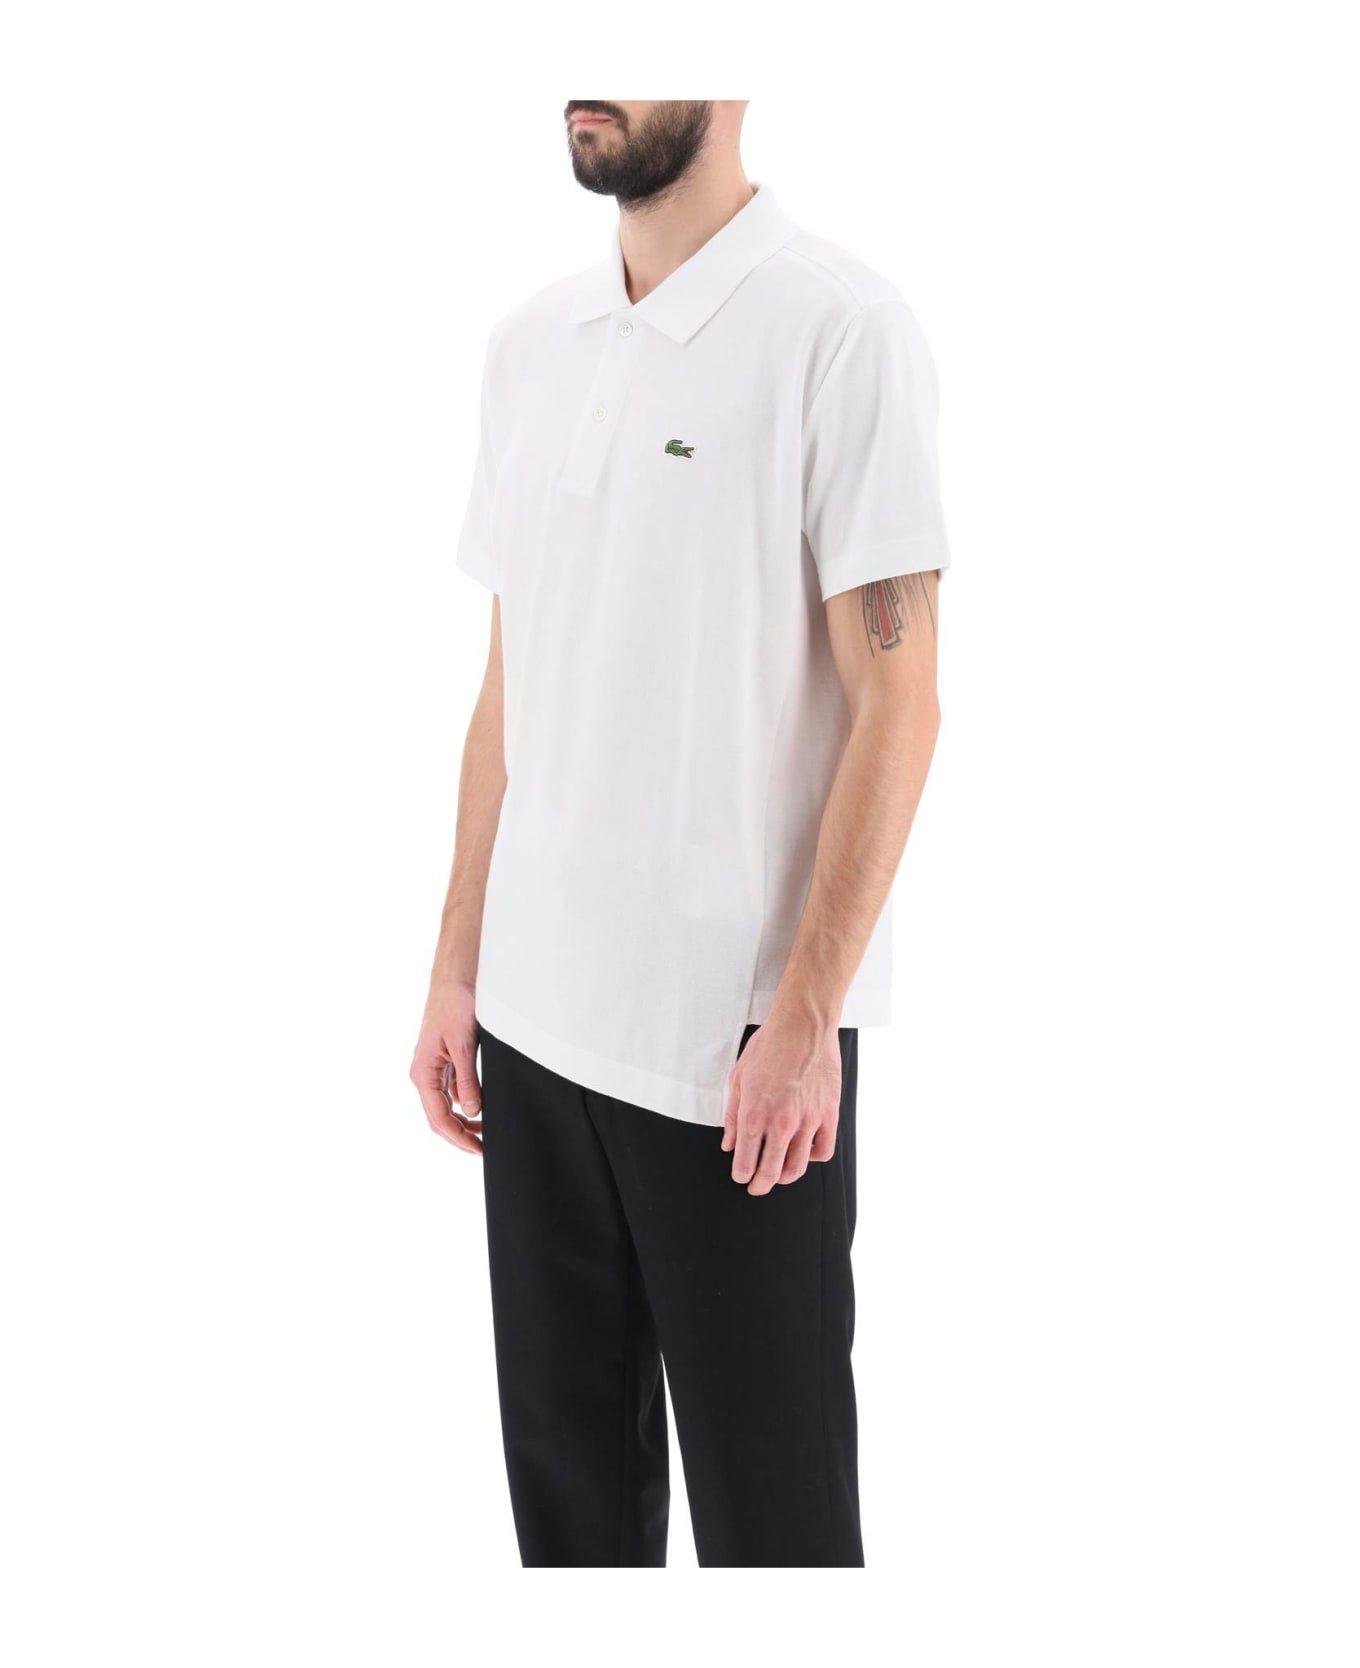 Comme des Garçons Shirt Boy Lacoste Crocodile Polo Shirt - White ポロシャツ